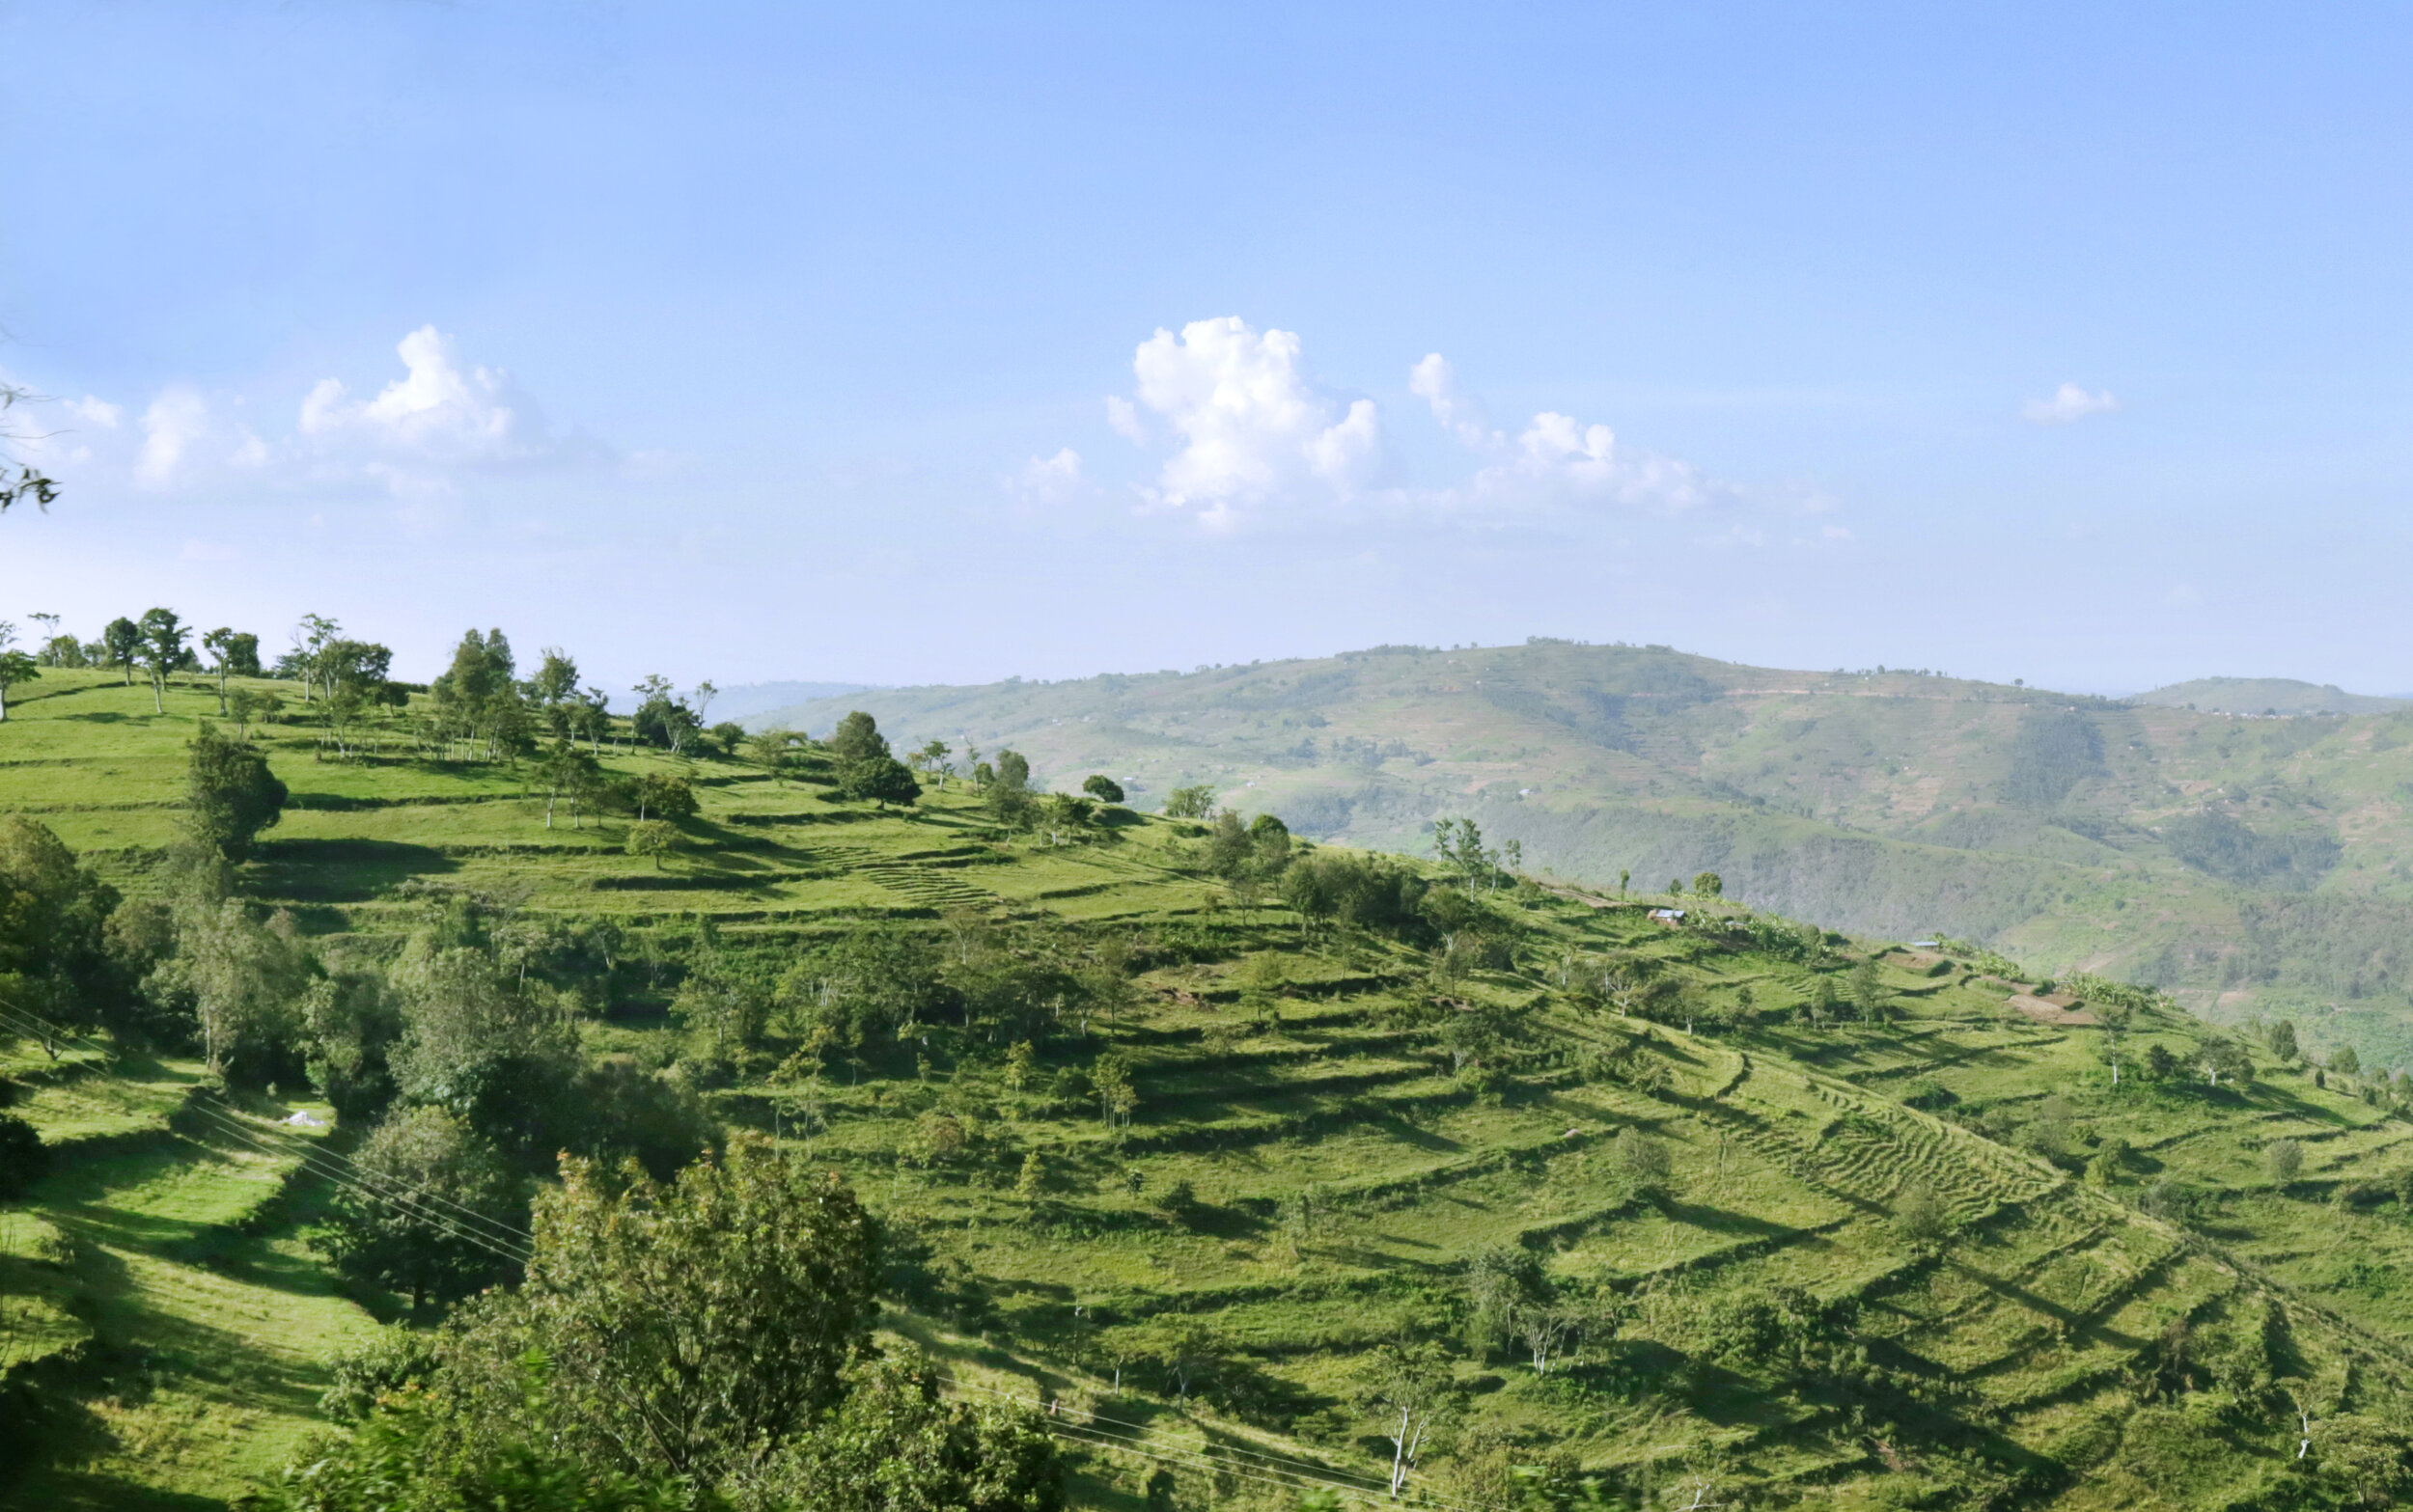  Rwanda -“the land of a thousand hills.” 